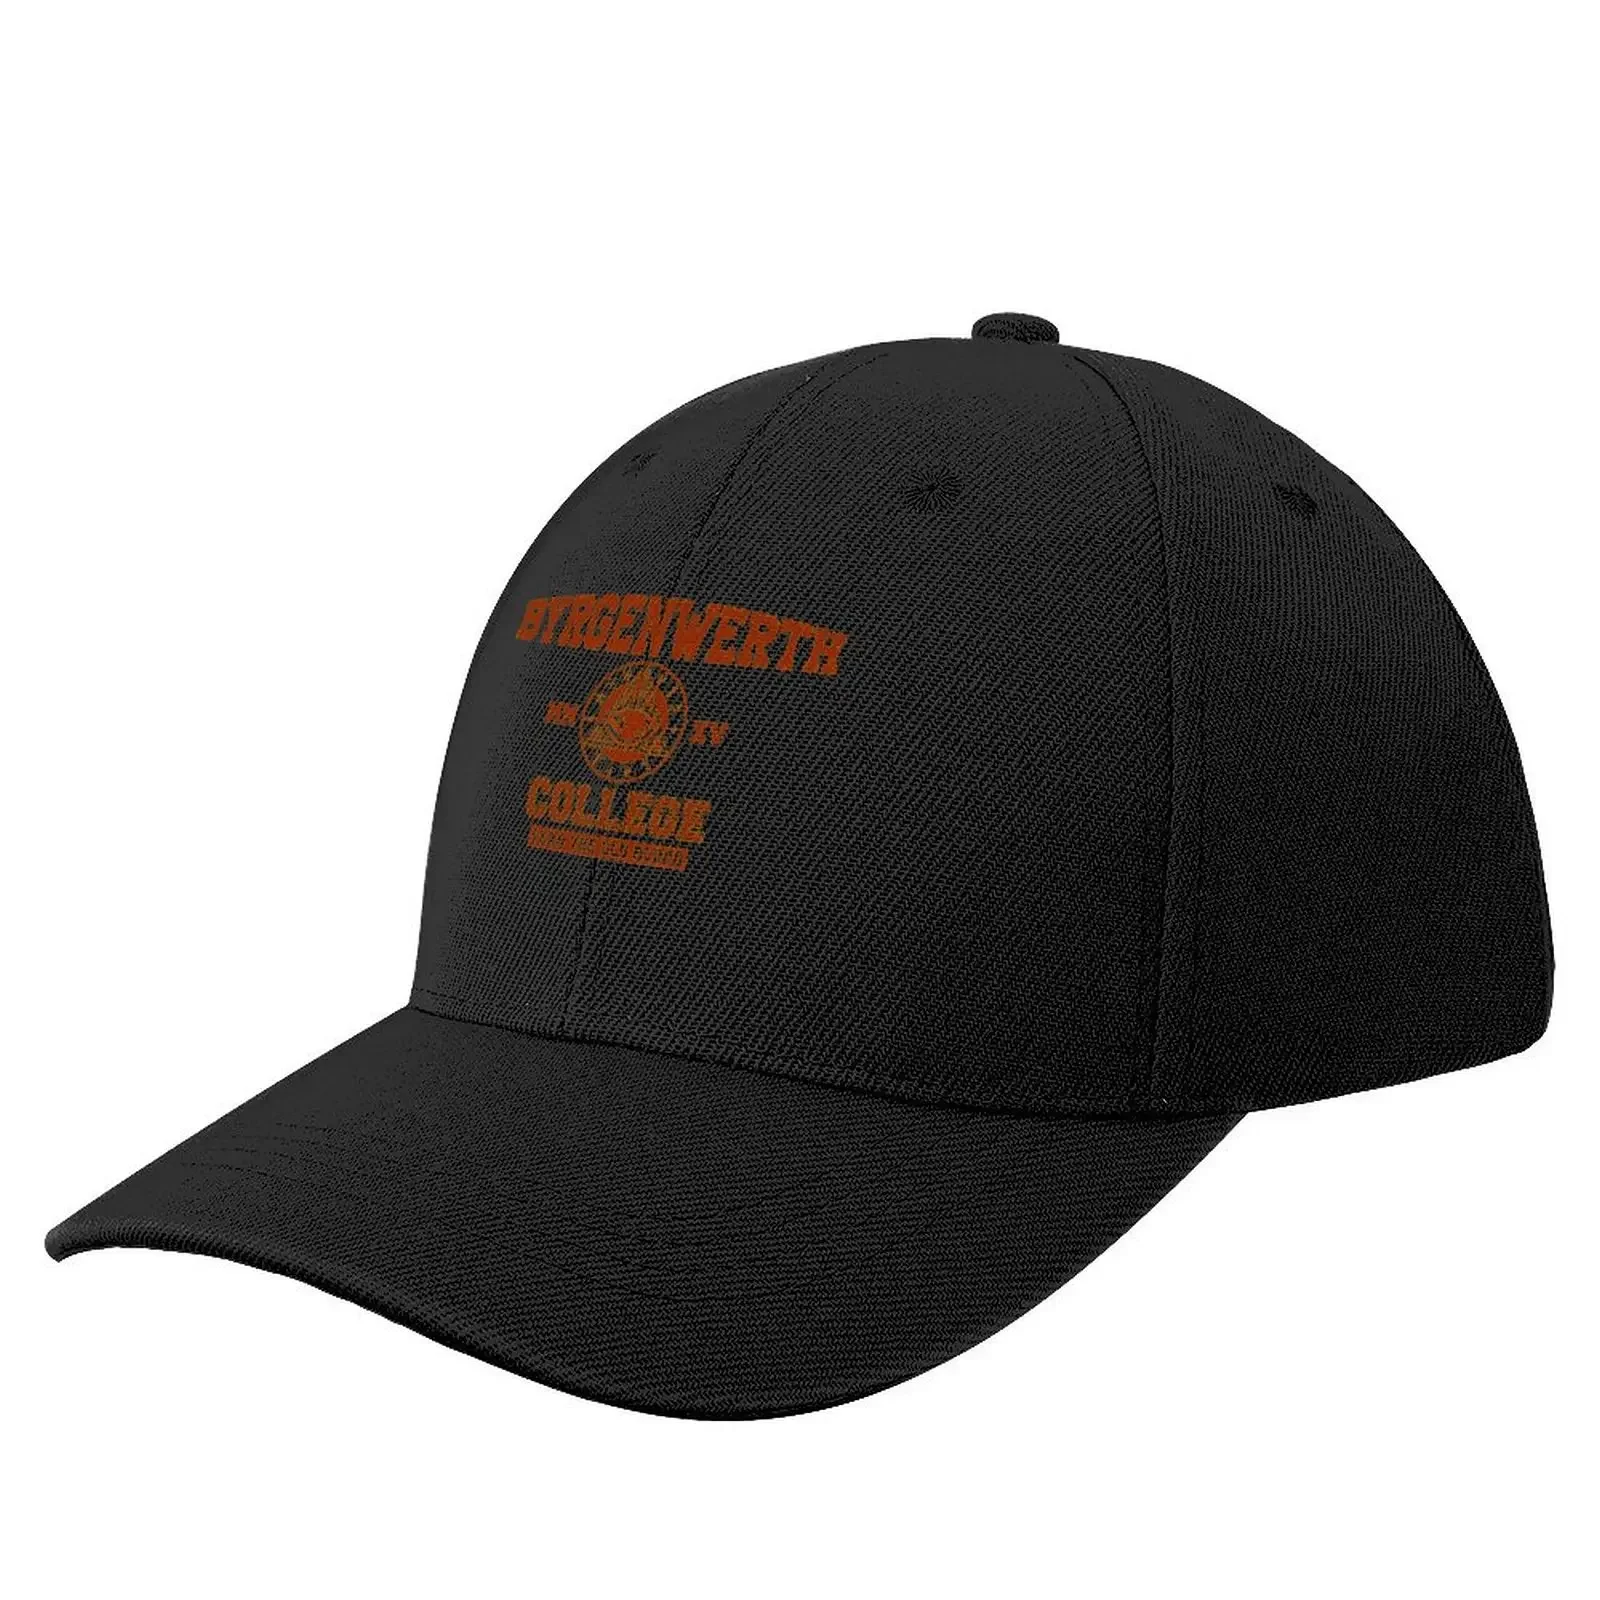 

Классическая футболка Byrgenwerth для колледжа, бейсболка, Западная шляпа, Солнцезащитная шляпа для детей, Мужская футболка для гольфа